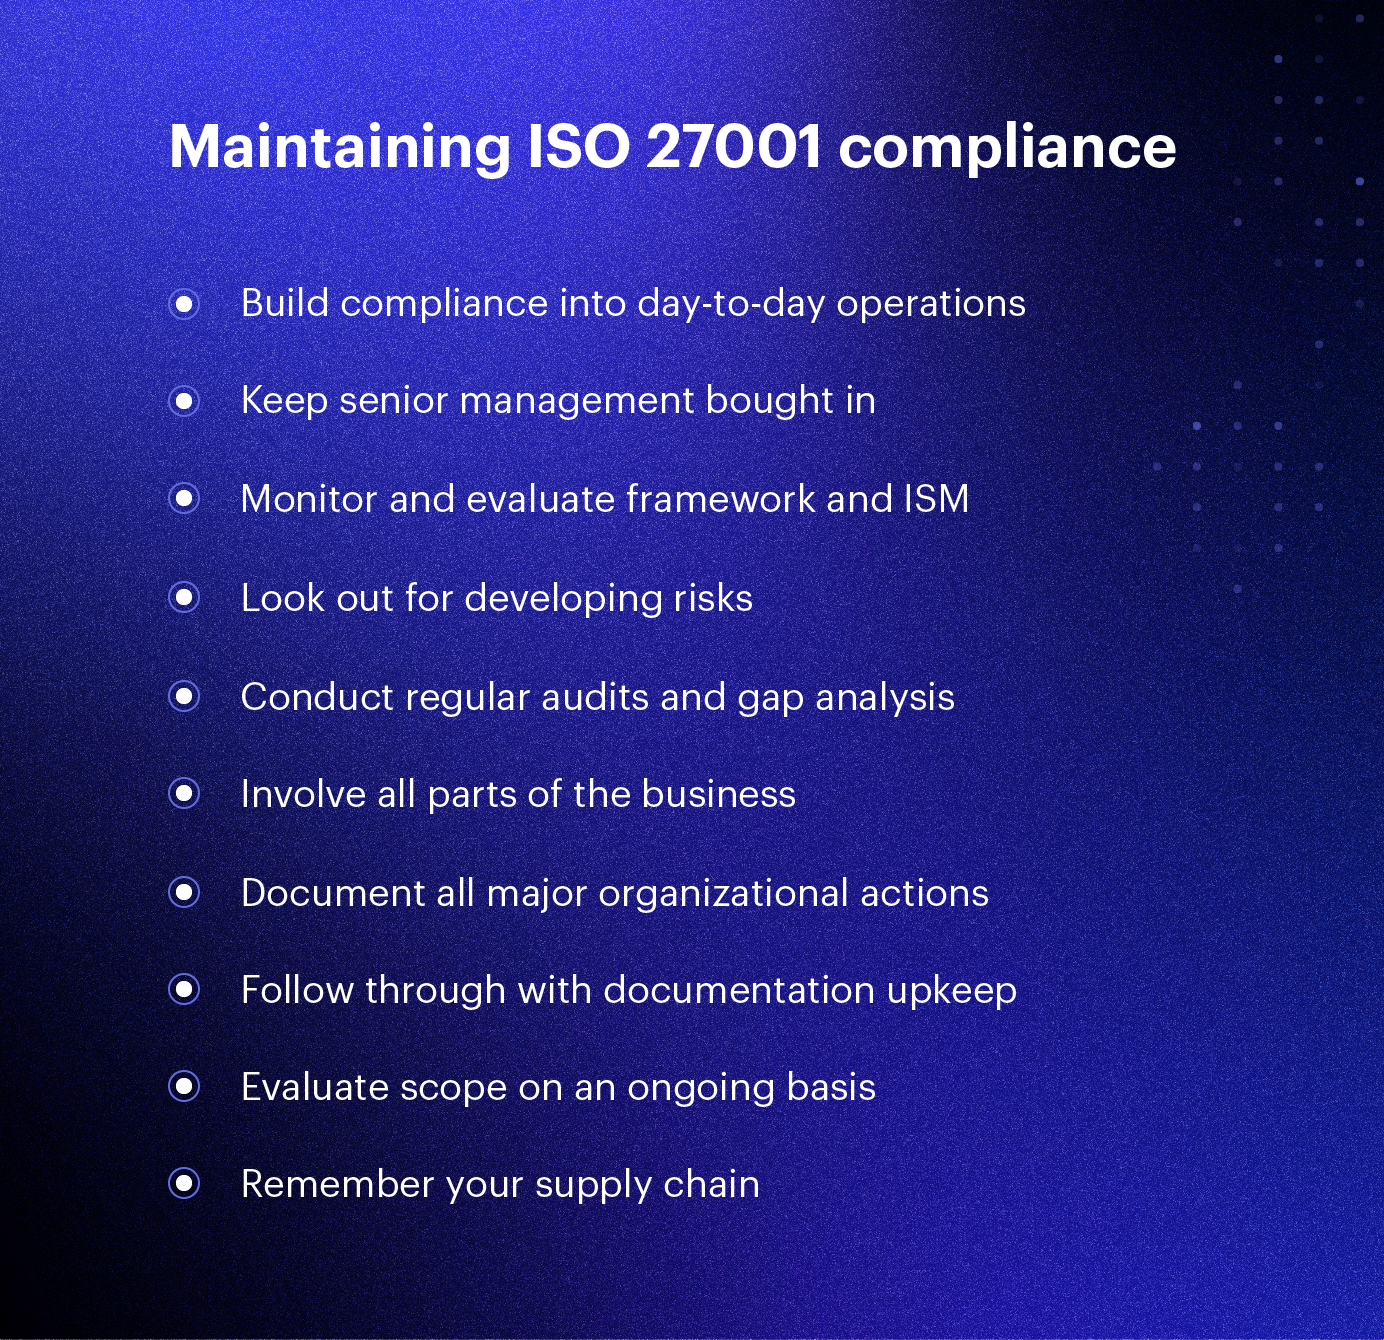 maintain-iso-27001-compliance@2x